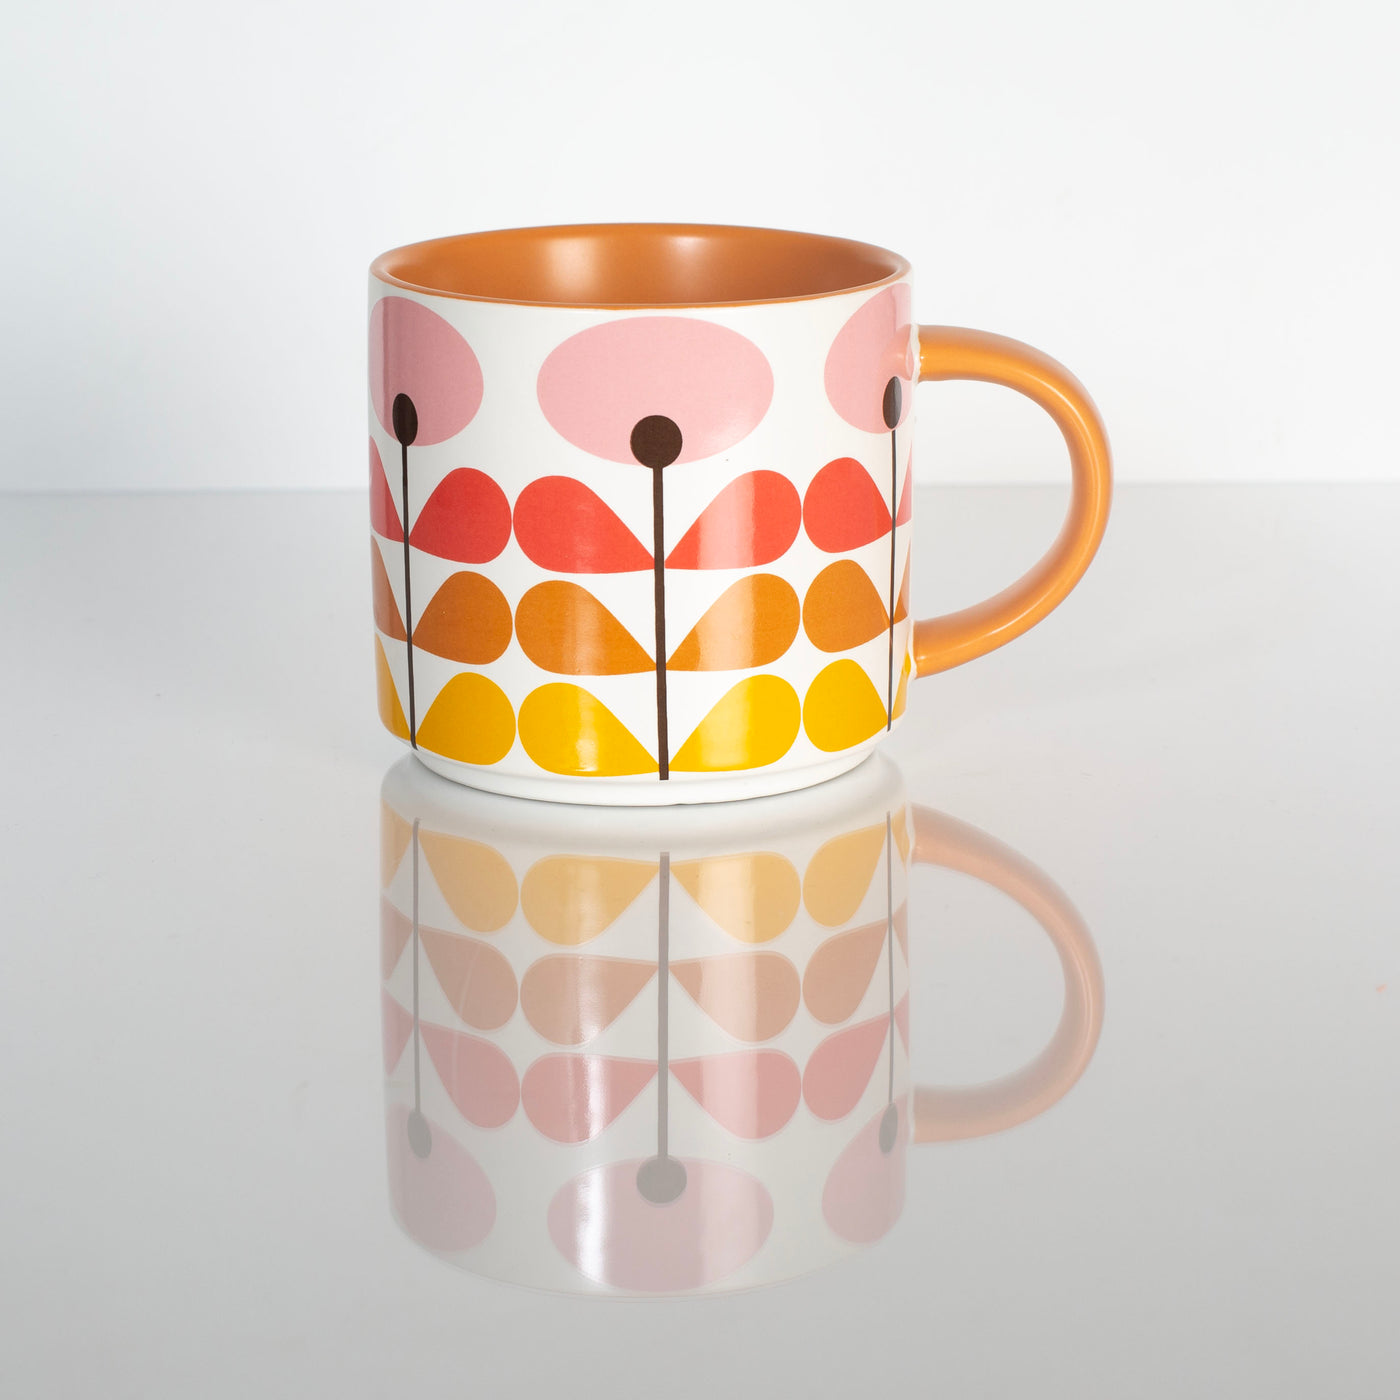 15oz mid century modern pink flower stackable ceramic mug. Matte finish coffee mug